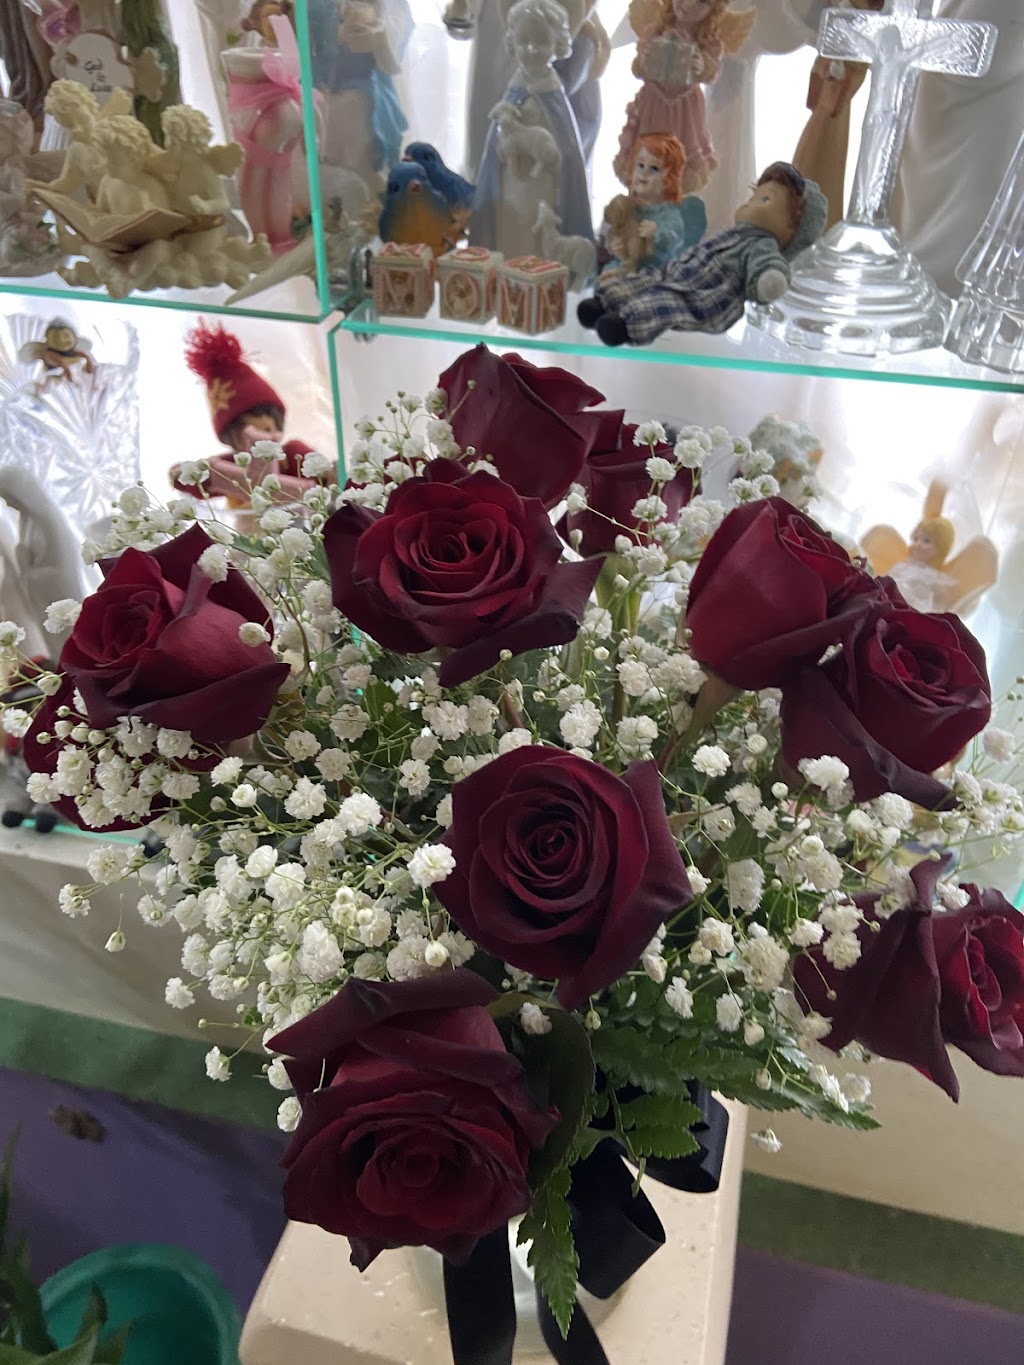 Alisa Florals | 541 W Main St, Millville, NJ 08332 | Phone: (856) 825-1316